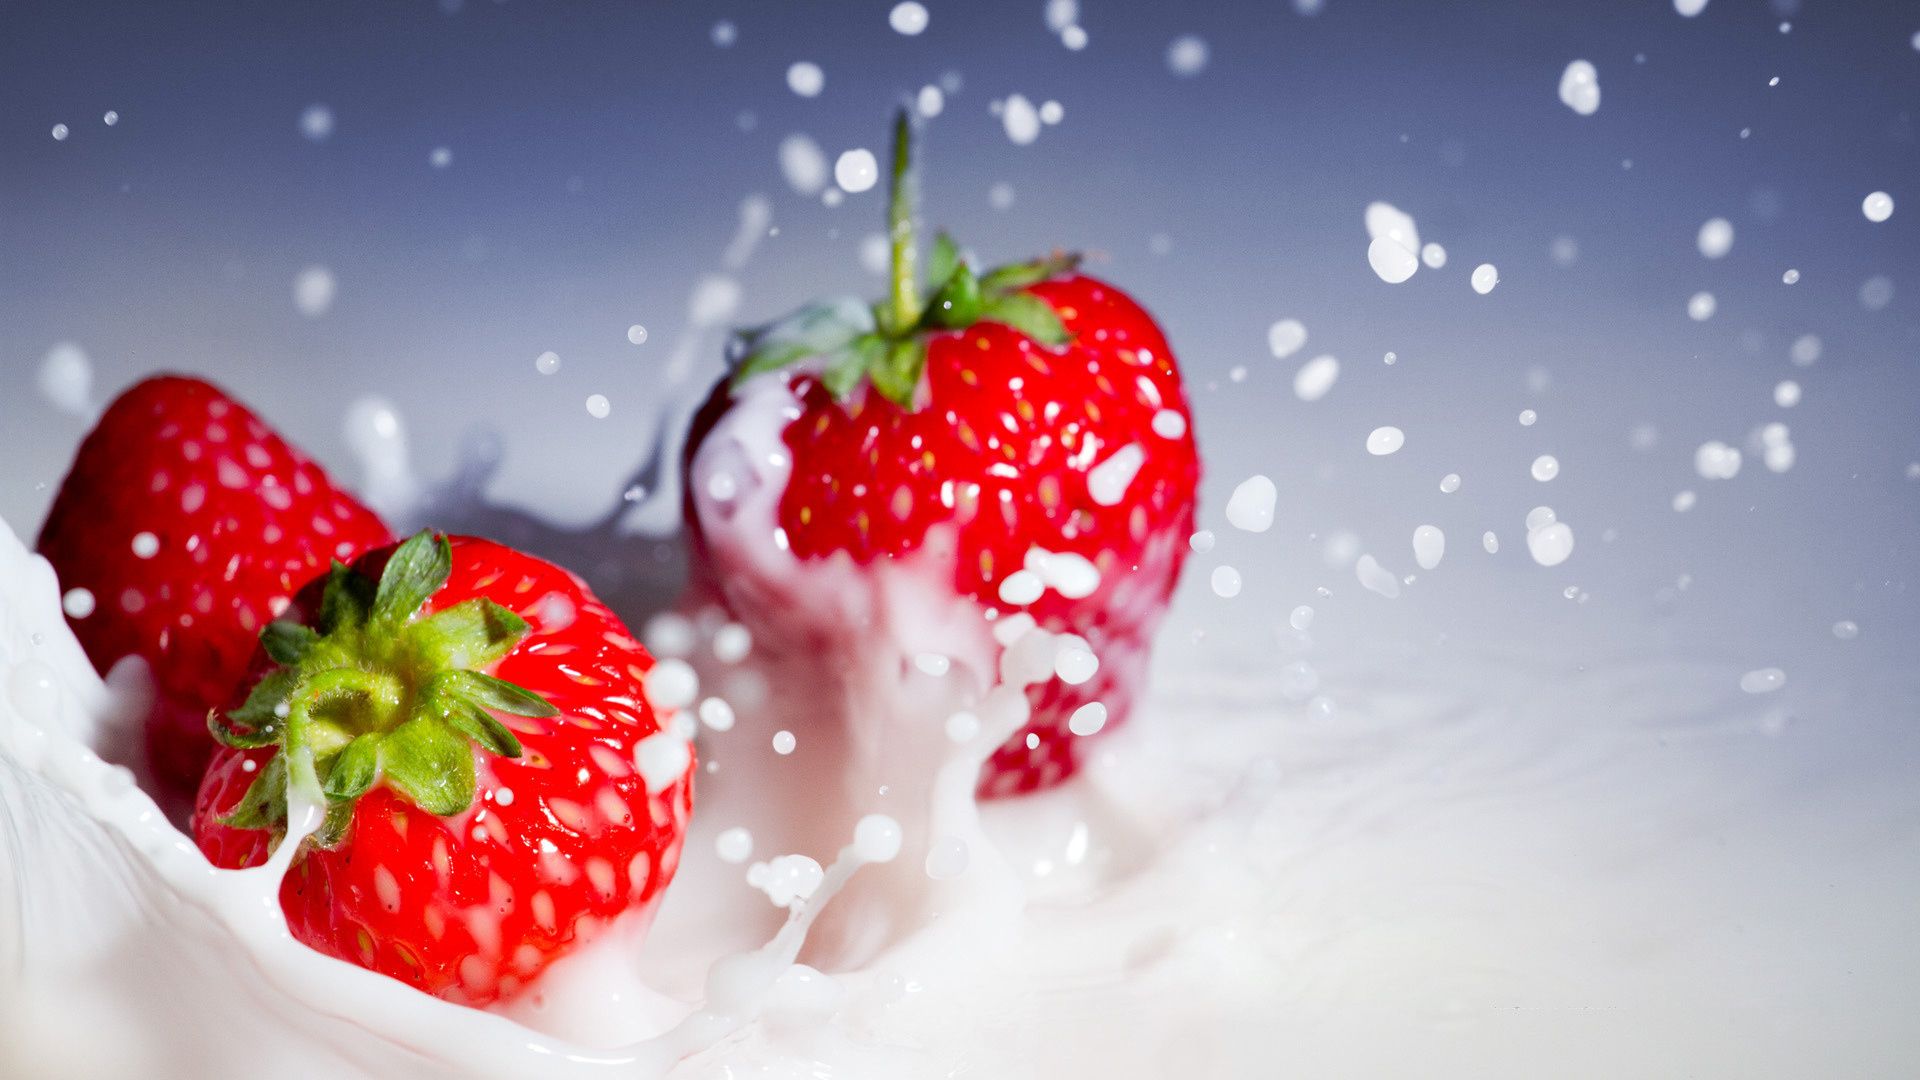 Free download Wallpaper food strawberry berry drops splash milk